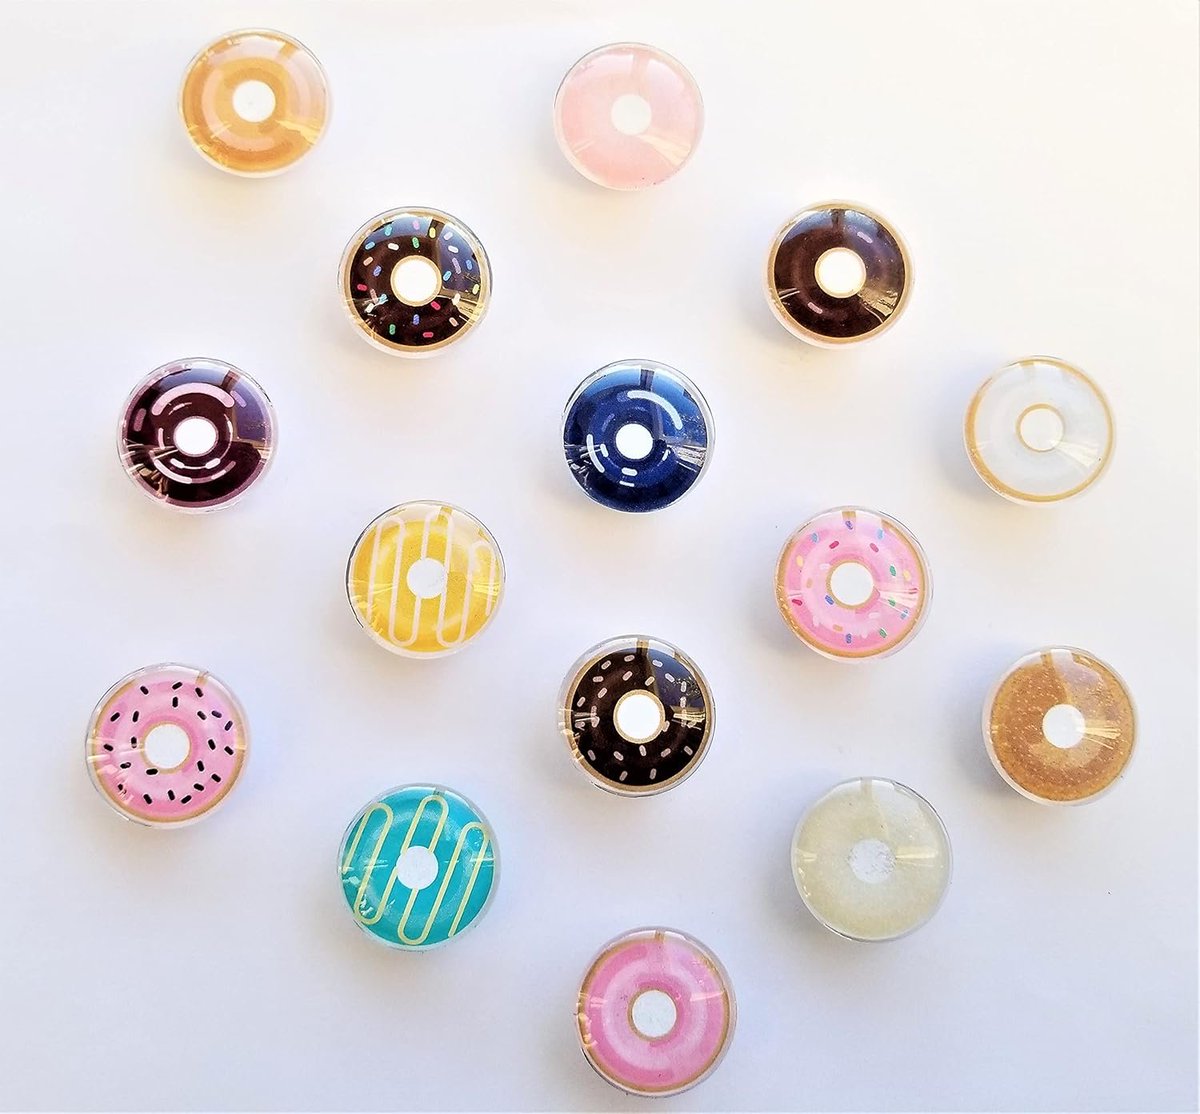 15 Donuts 1' Glass Fridge Magnets from ShahFamCrafts on Amazon Handmade.

amzn.to/3QJ31p8 via @amazon #ad #NationalDonutDay #magnets